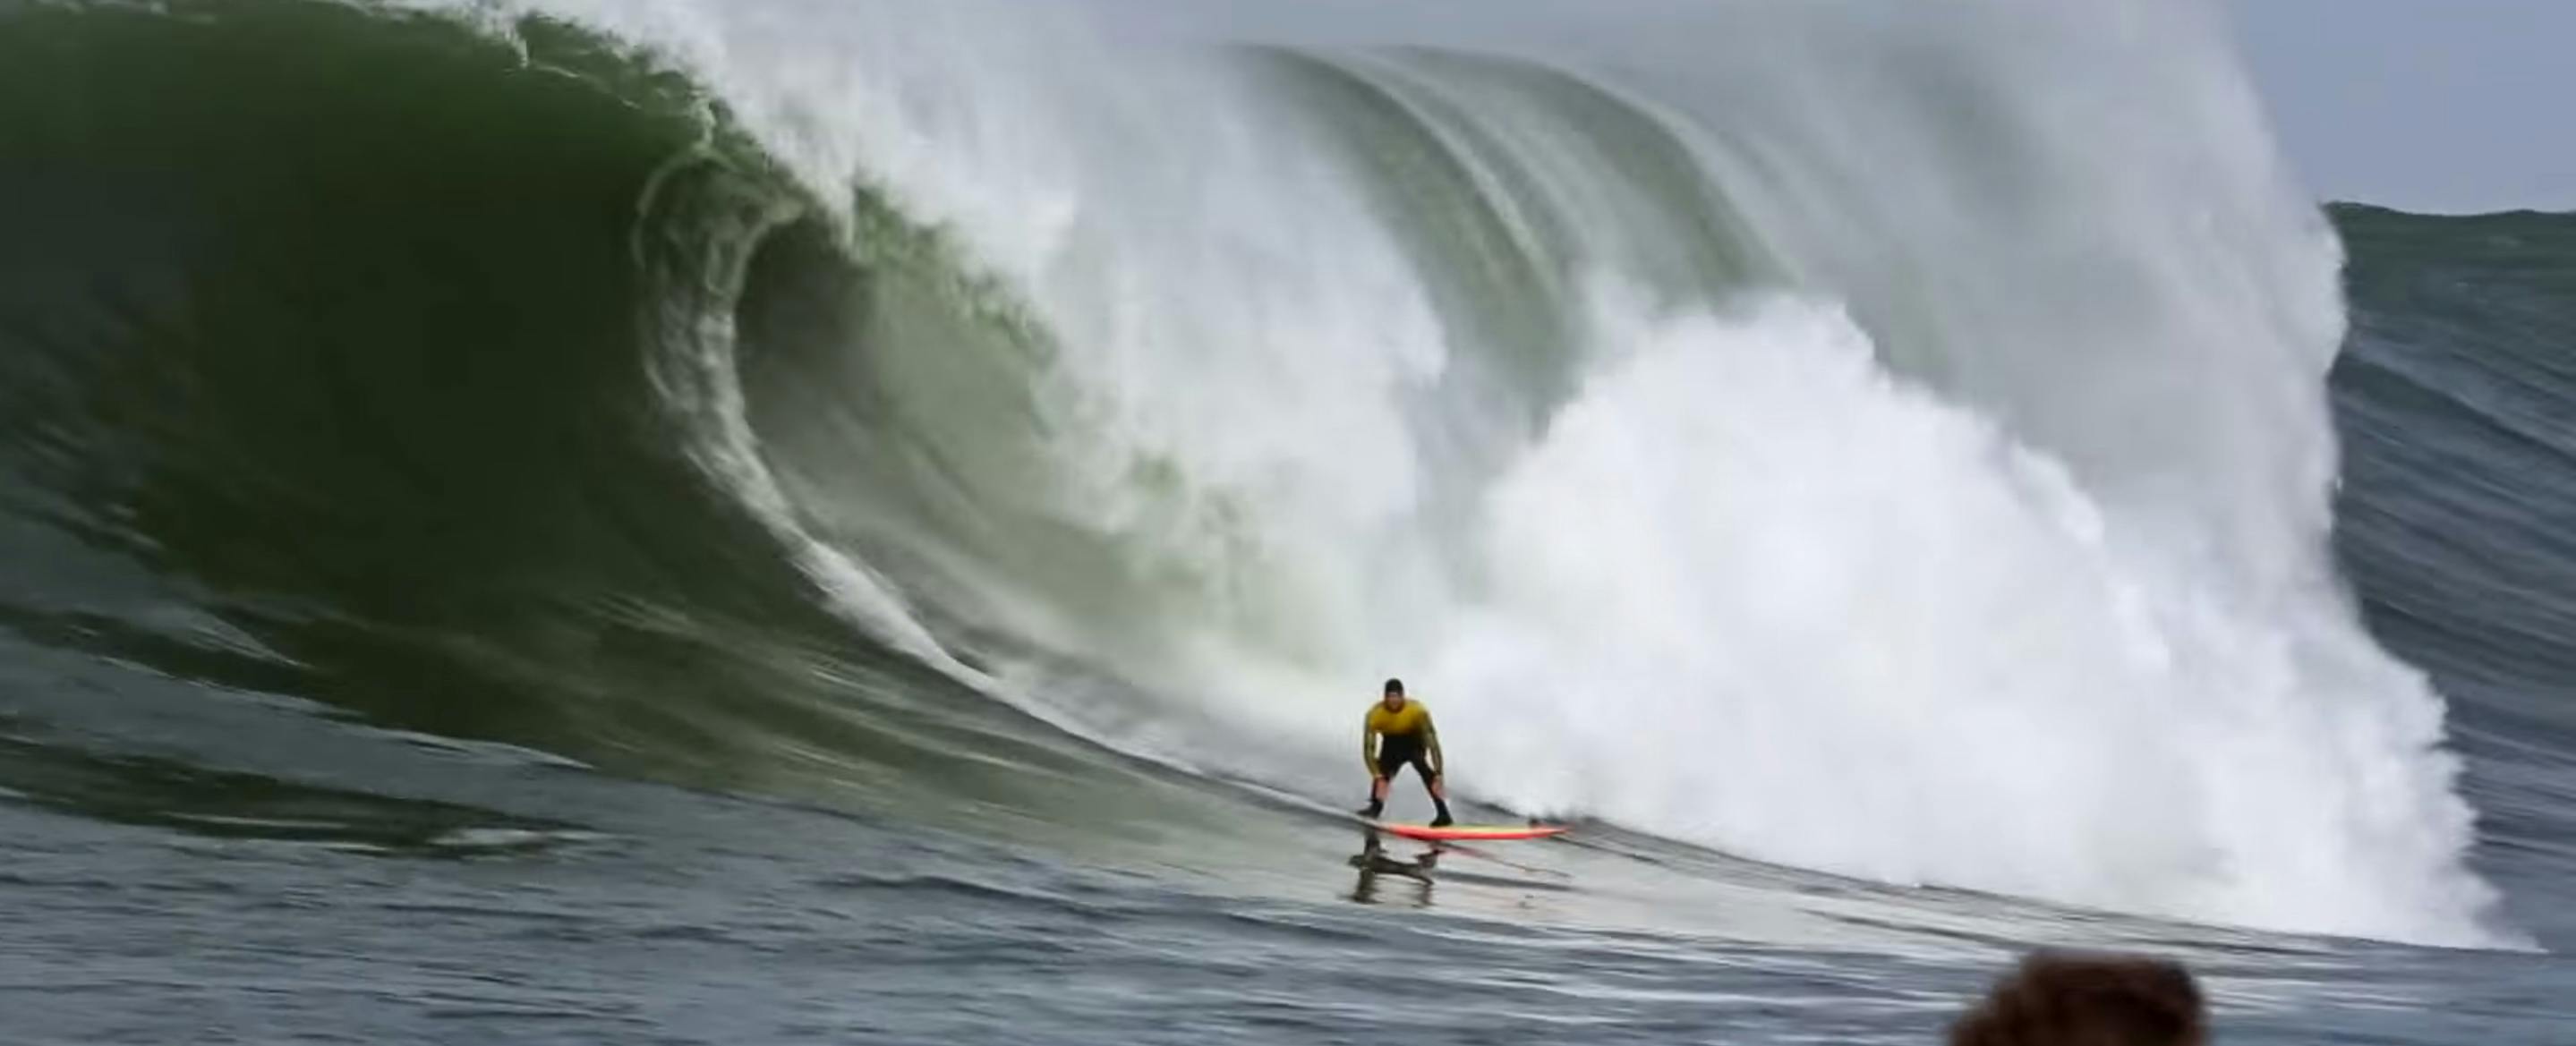 Part-Time Geologist, Full-Time Big Wave Surfer